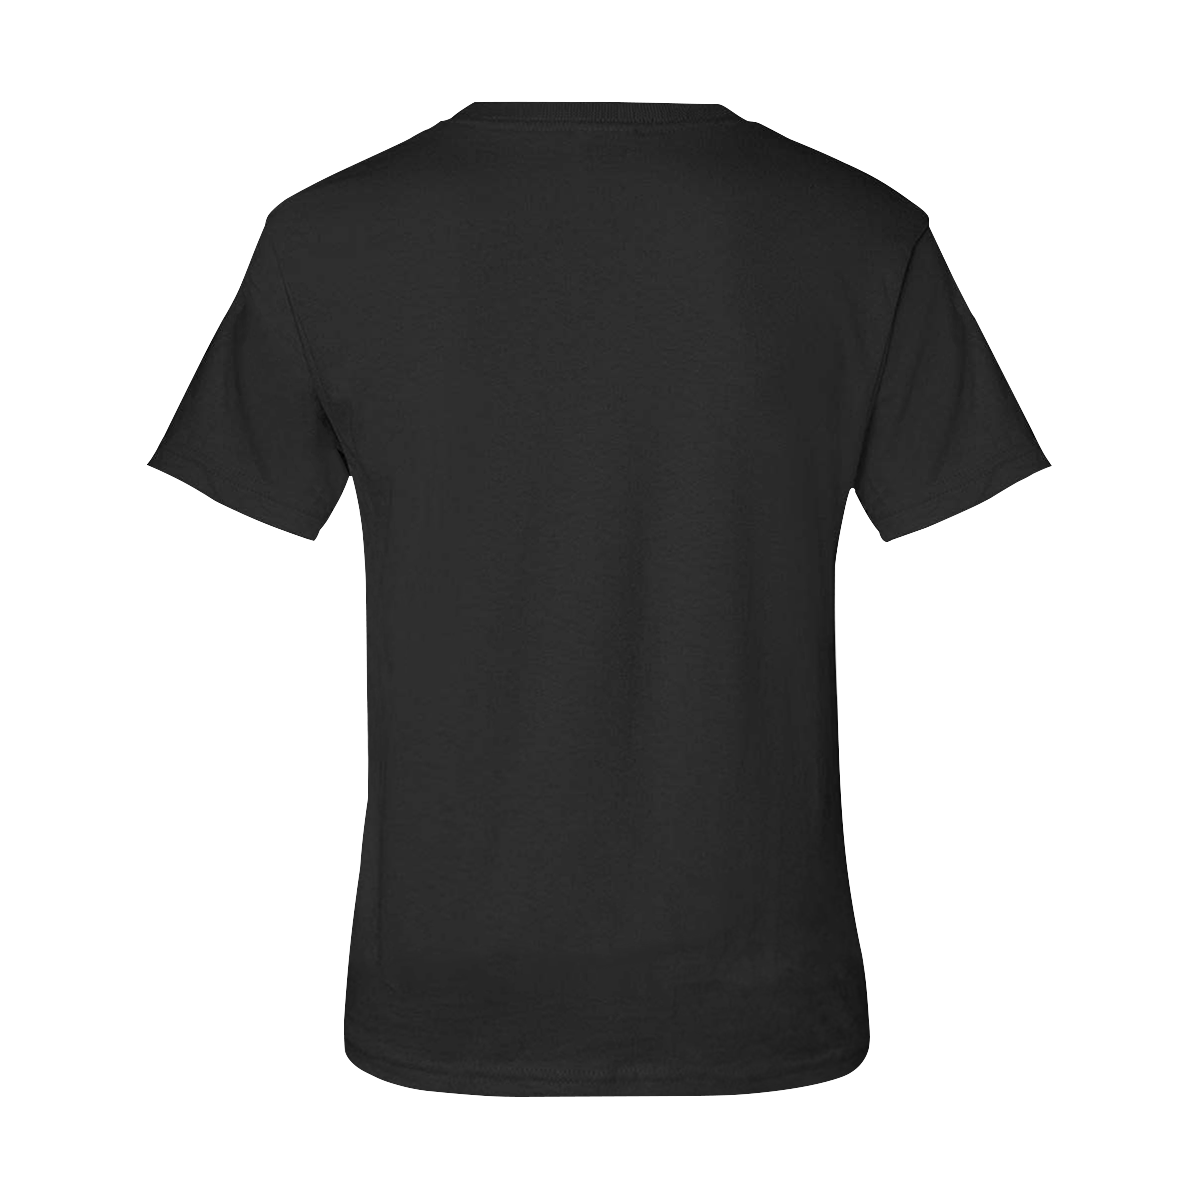 Raven Lines Long Women's Raglan T-Shirt/Front Printing (Model T62)